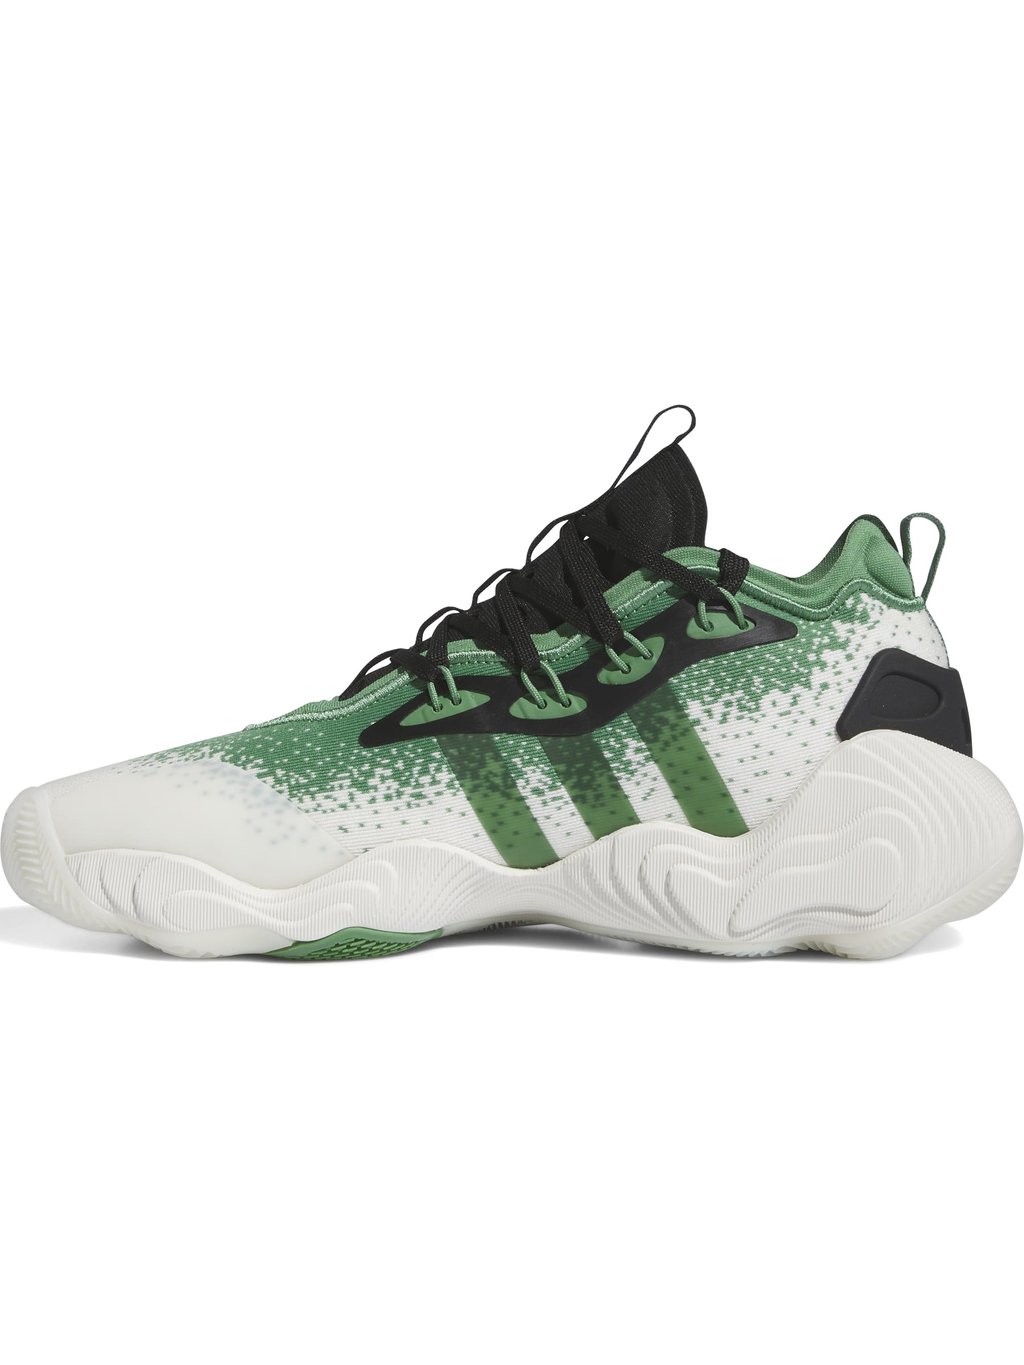 Баскетбольные кроссовки Trae Young 3 Adidas, цвет off white preloved green core black